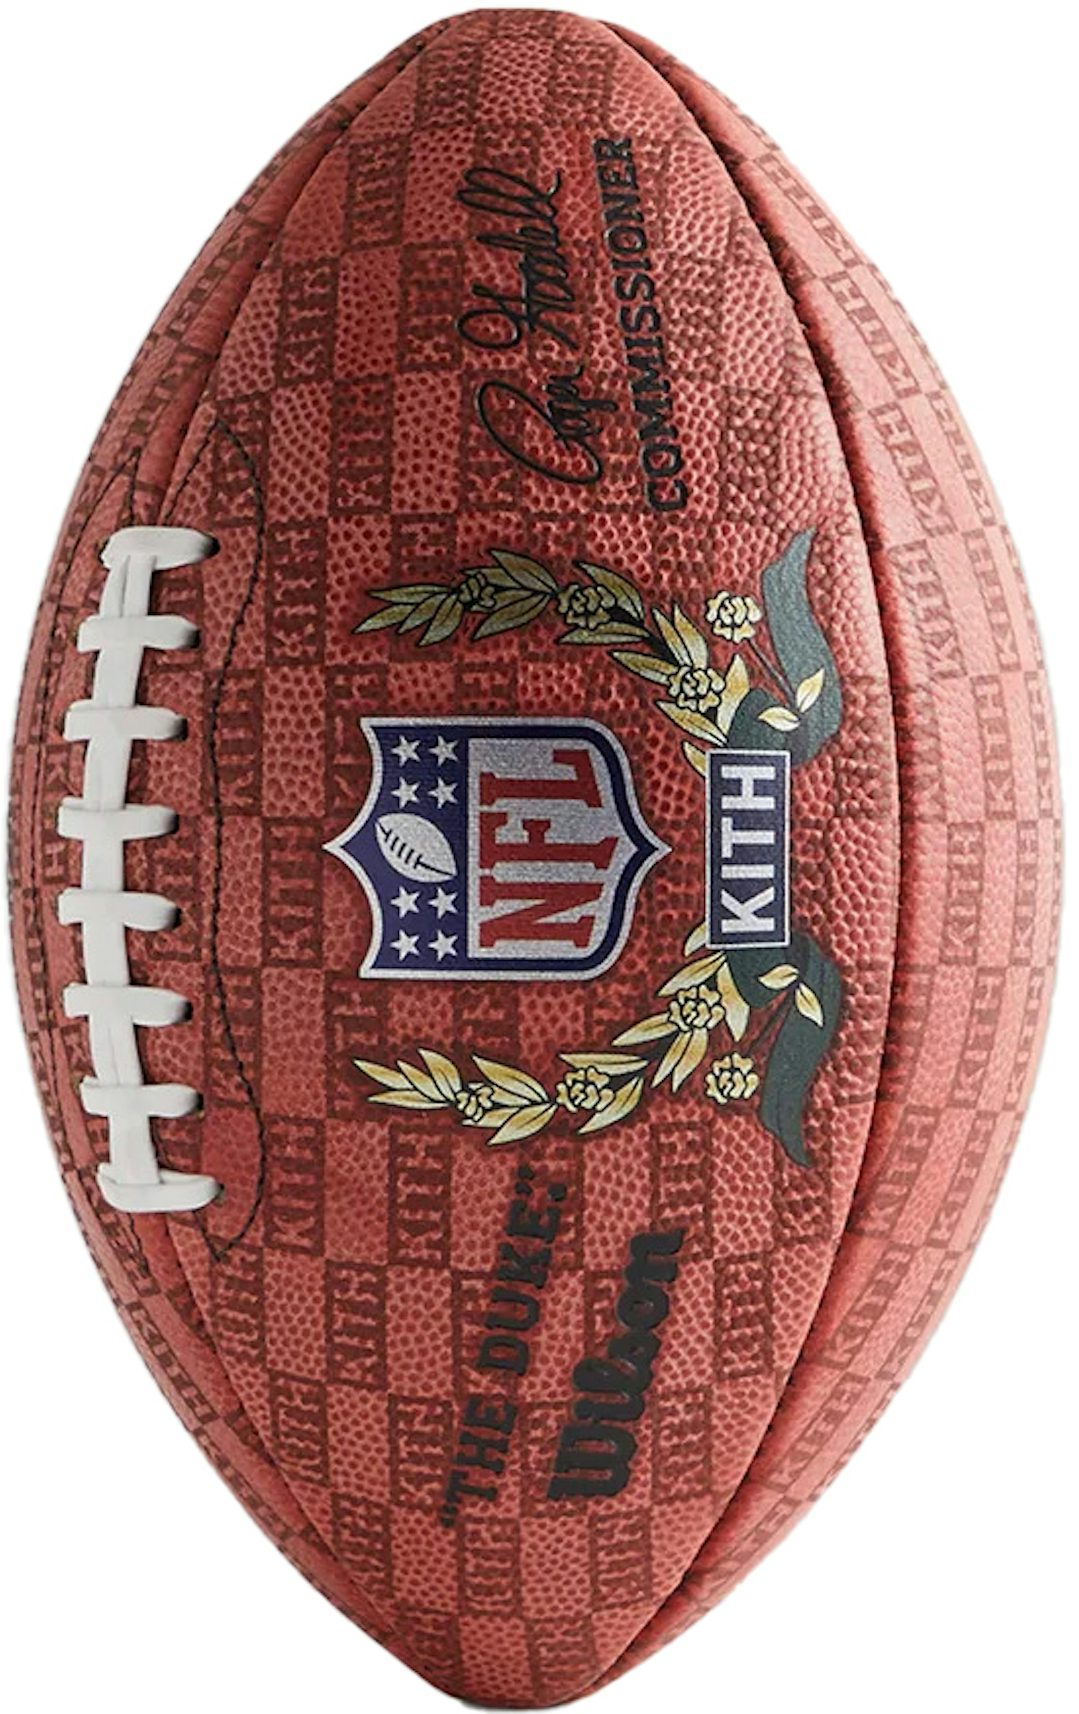 Kith for the NFL: Giants Mitchell & Ness Mark Bavaro Jersey - Sandrift